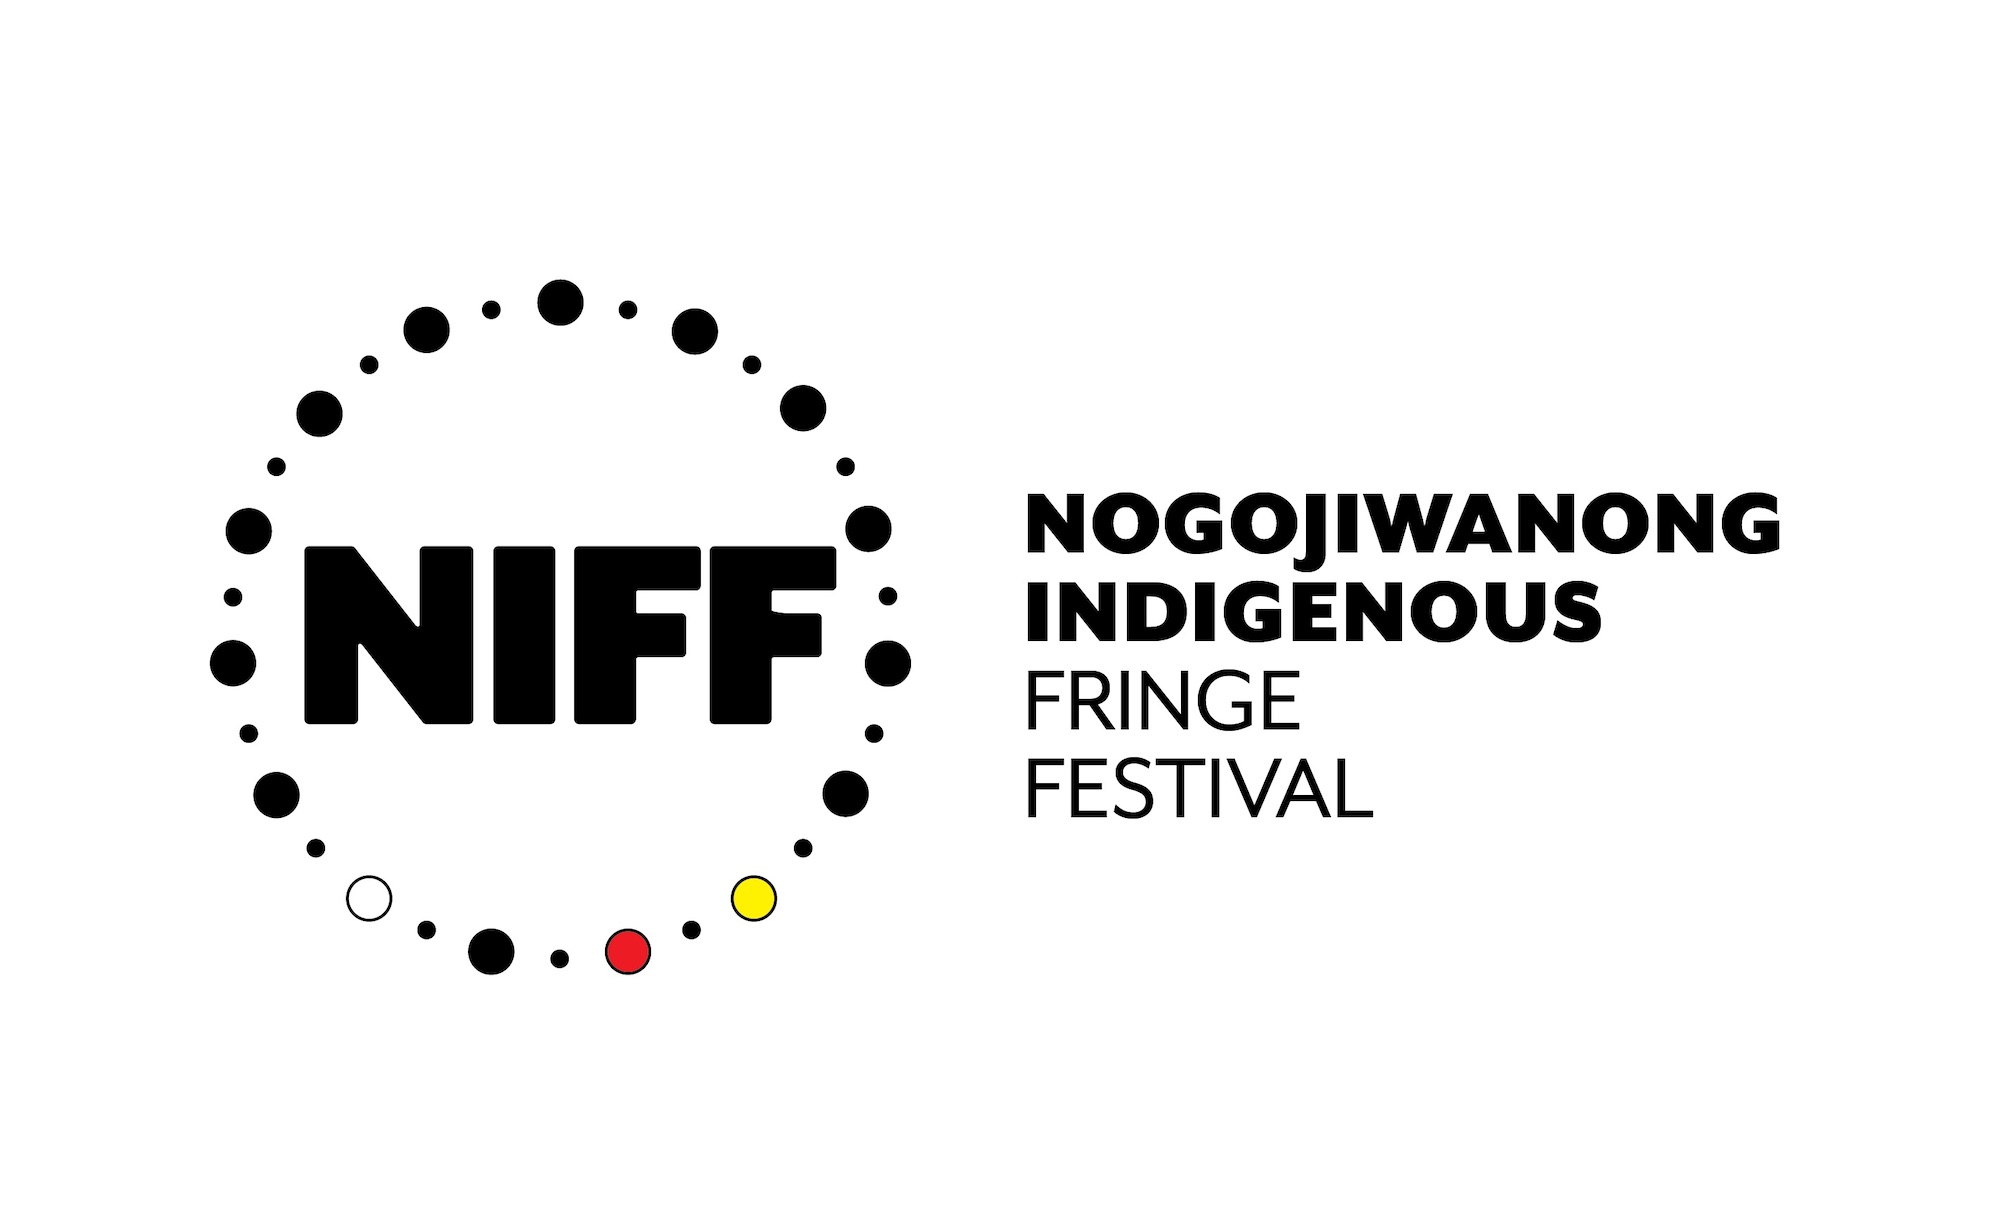 Nogojiwanong Indigenous Fringe Festival